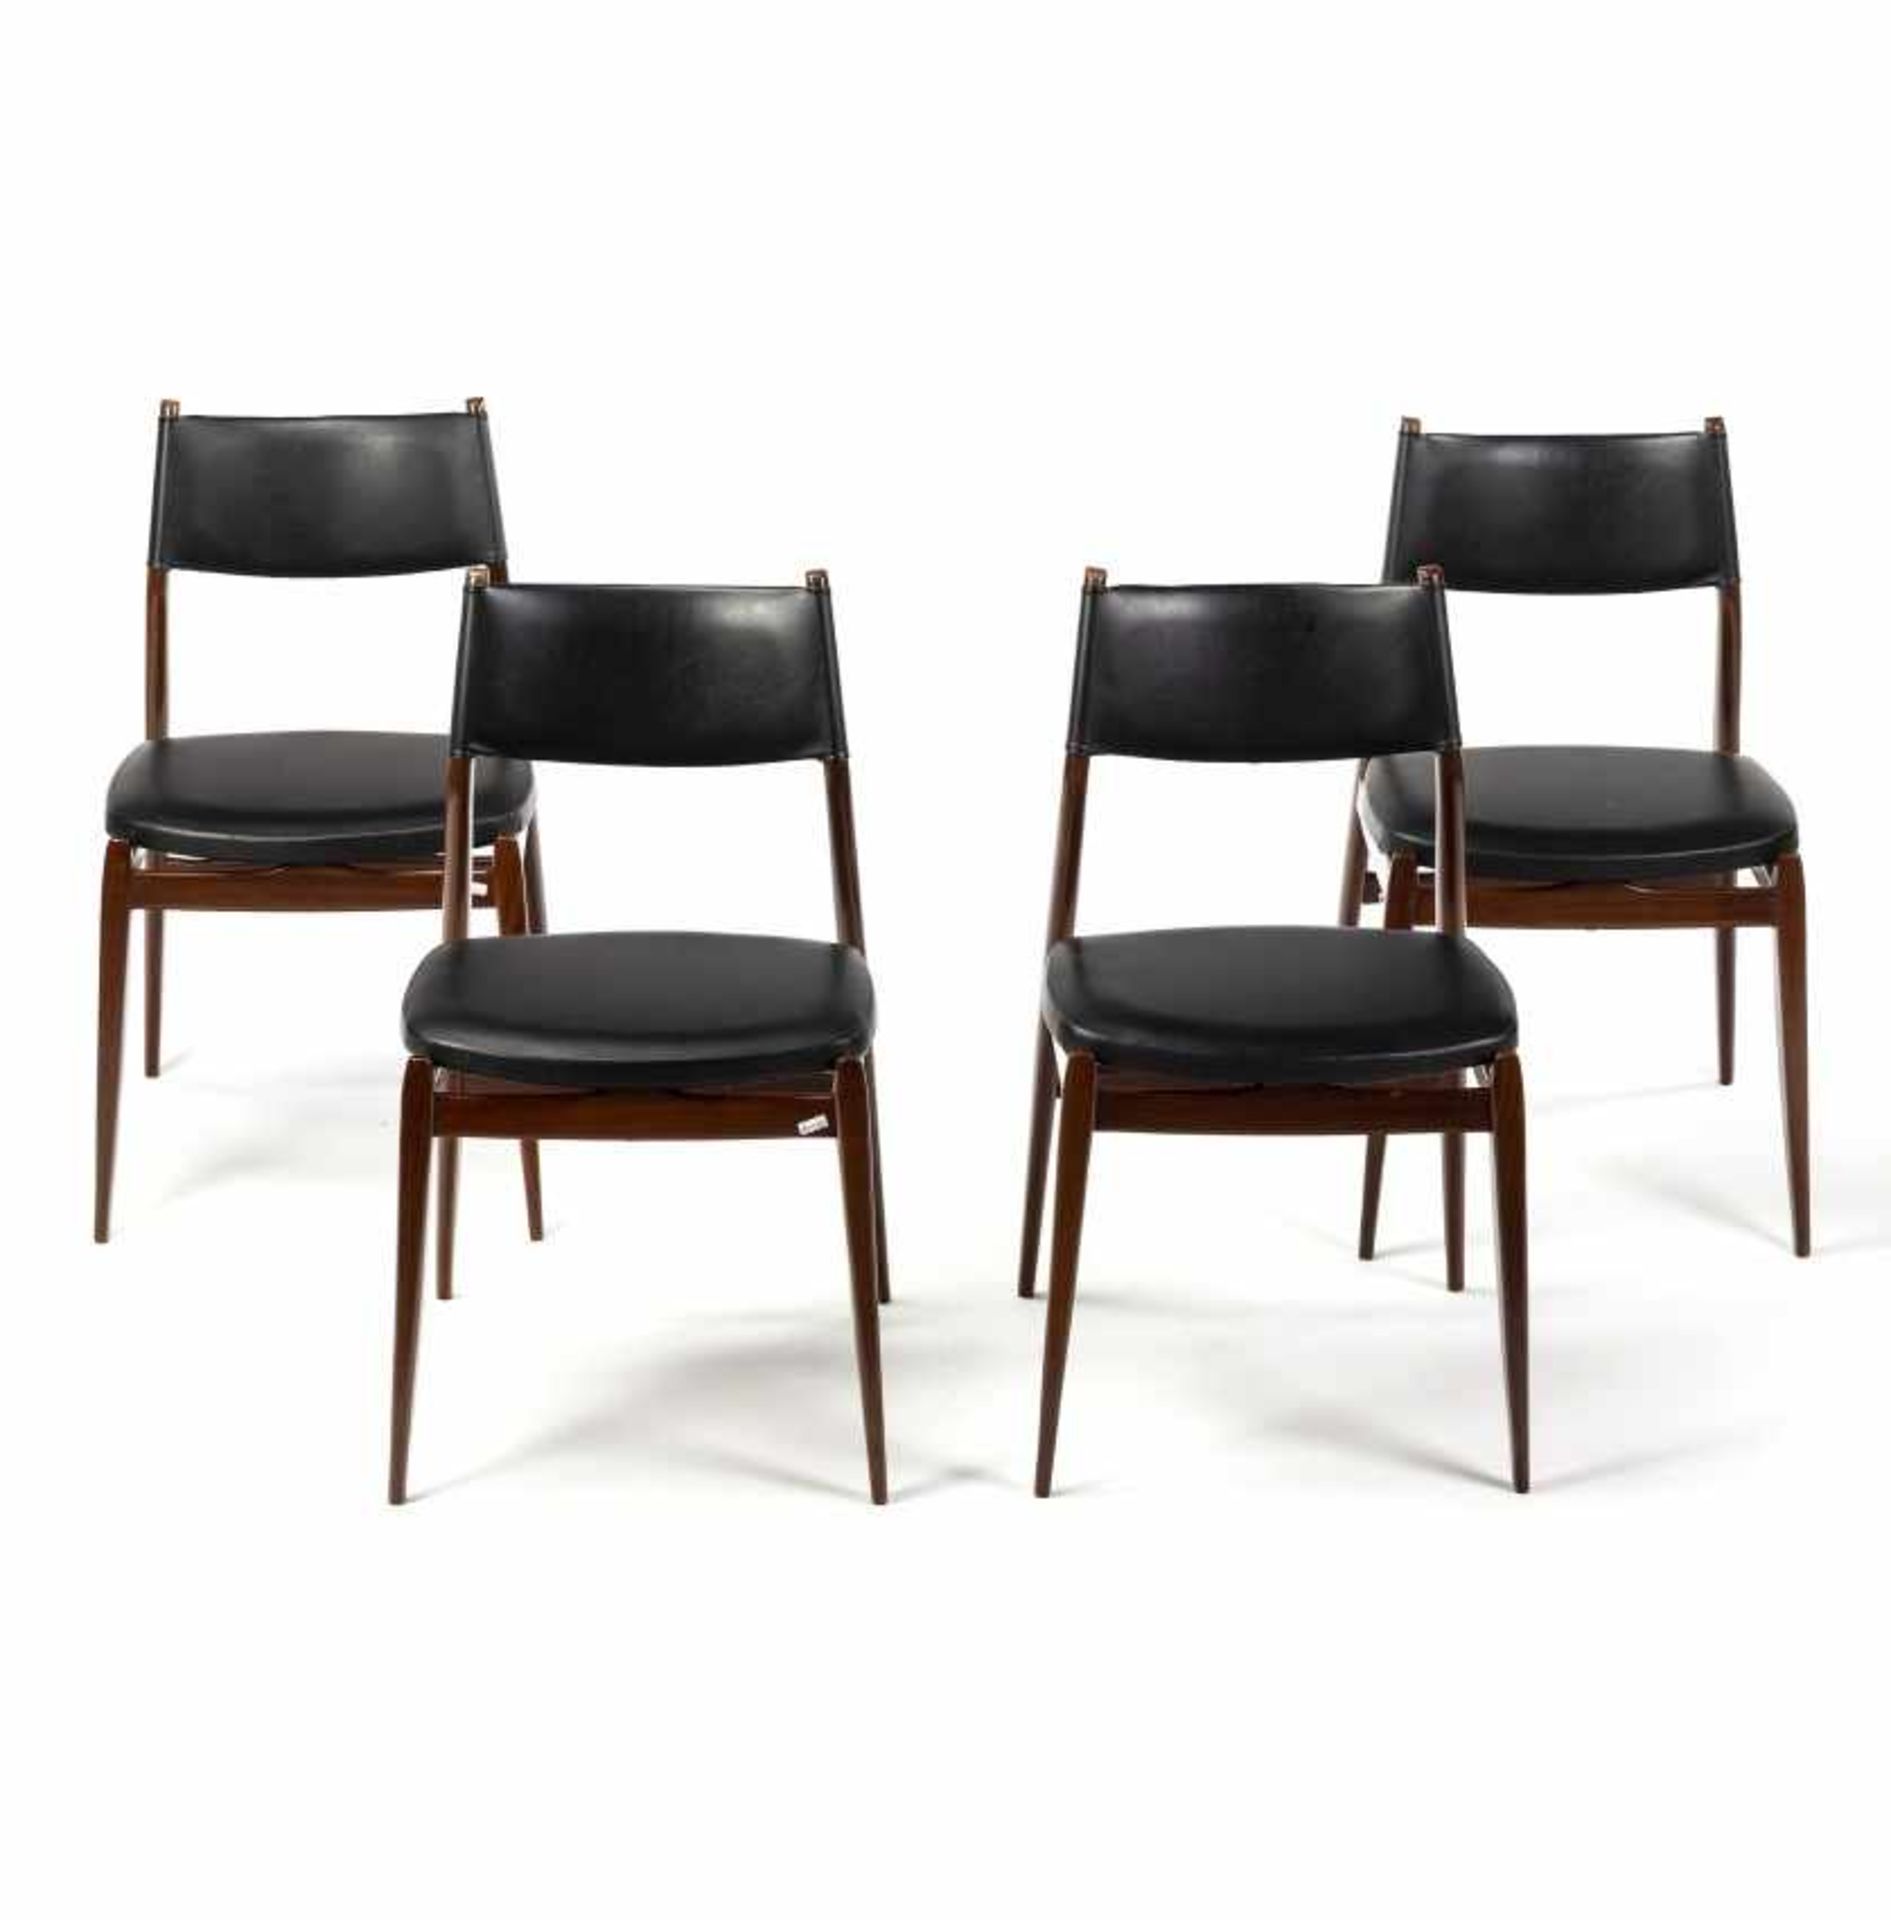 Set of four Danish chairs in teak and original upholstery iSet of four Danish chairs in teak and